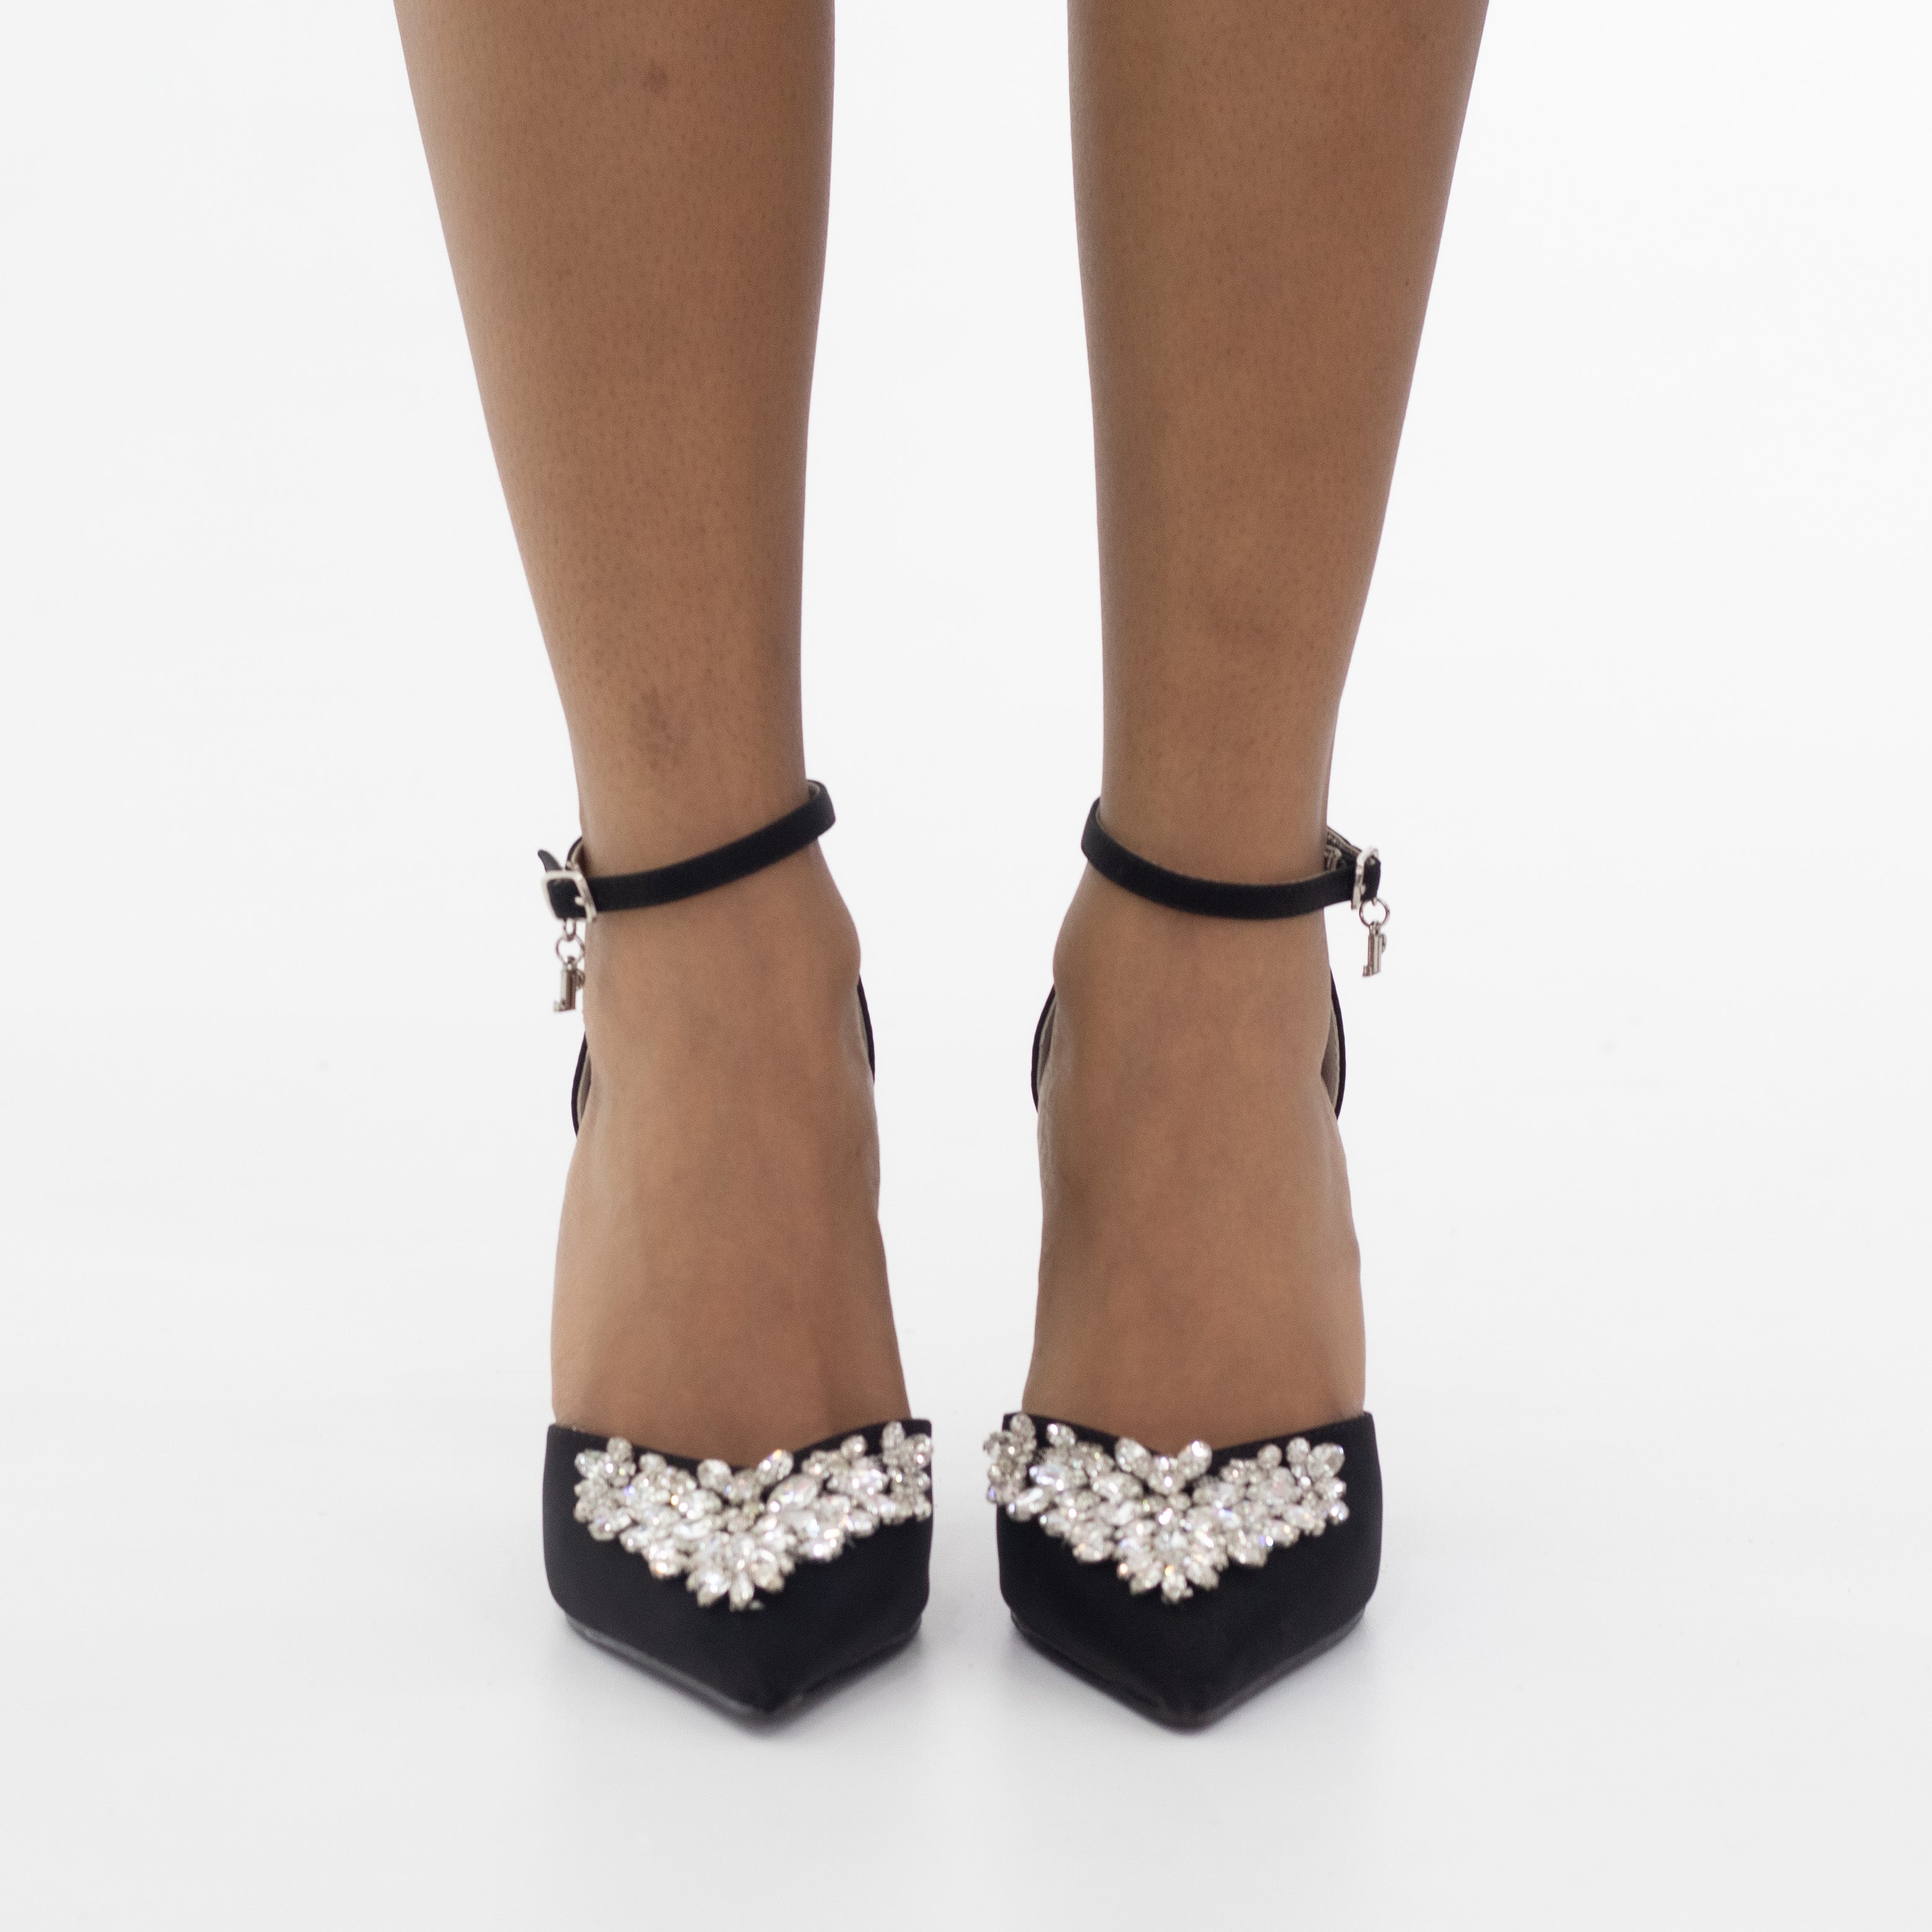 Black mid heel SATIN PU with v-shaped diamante trim kora